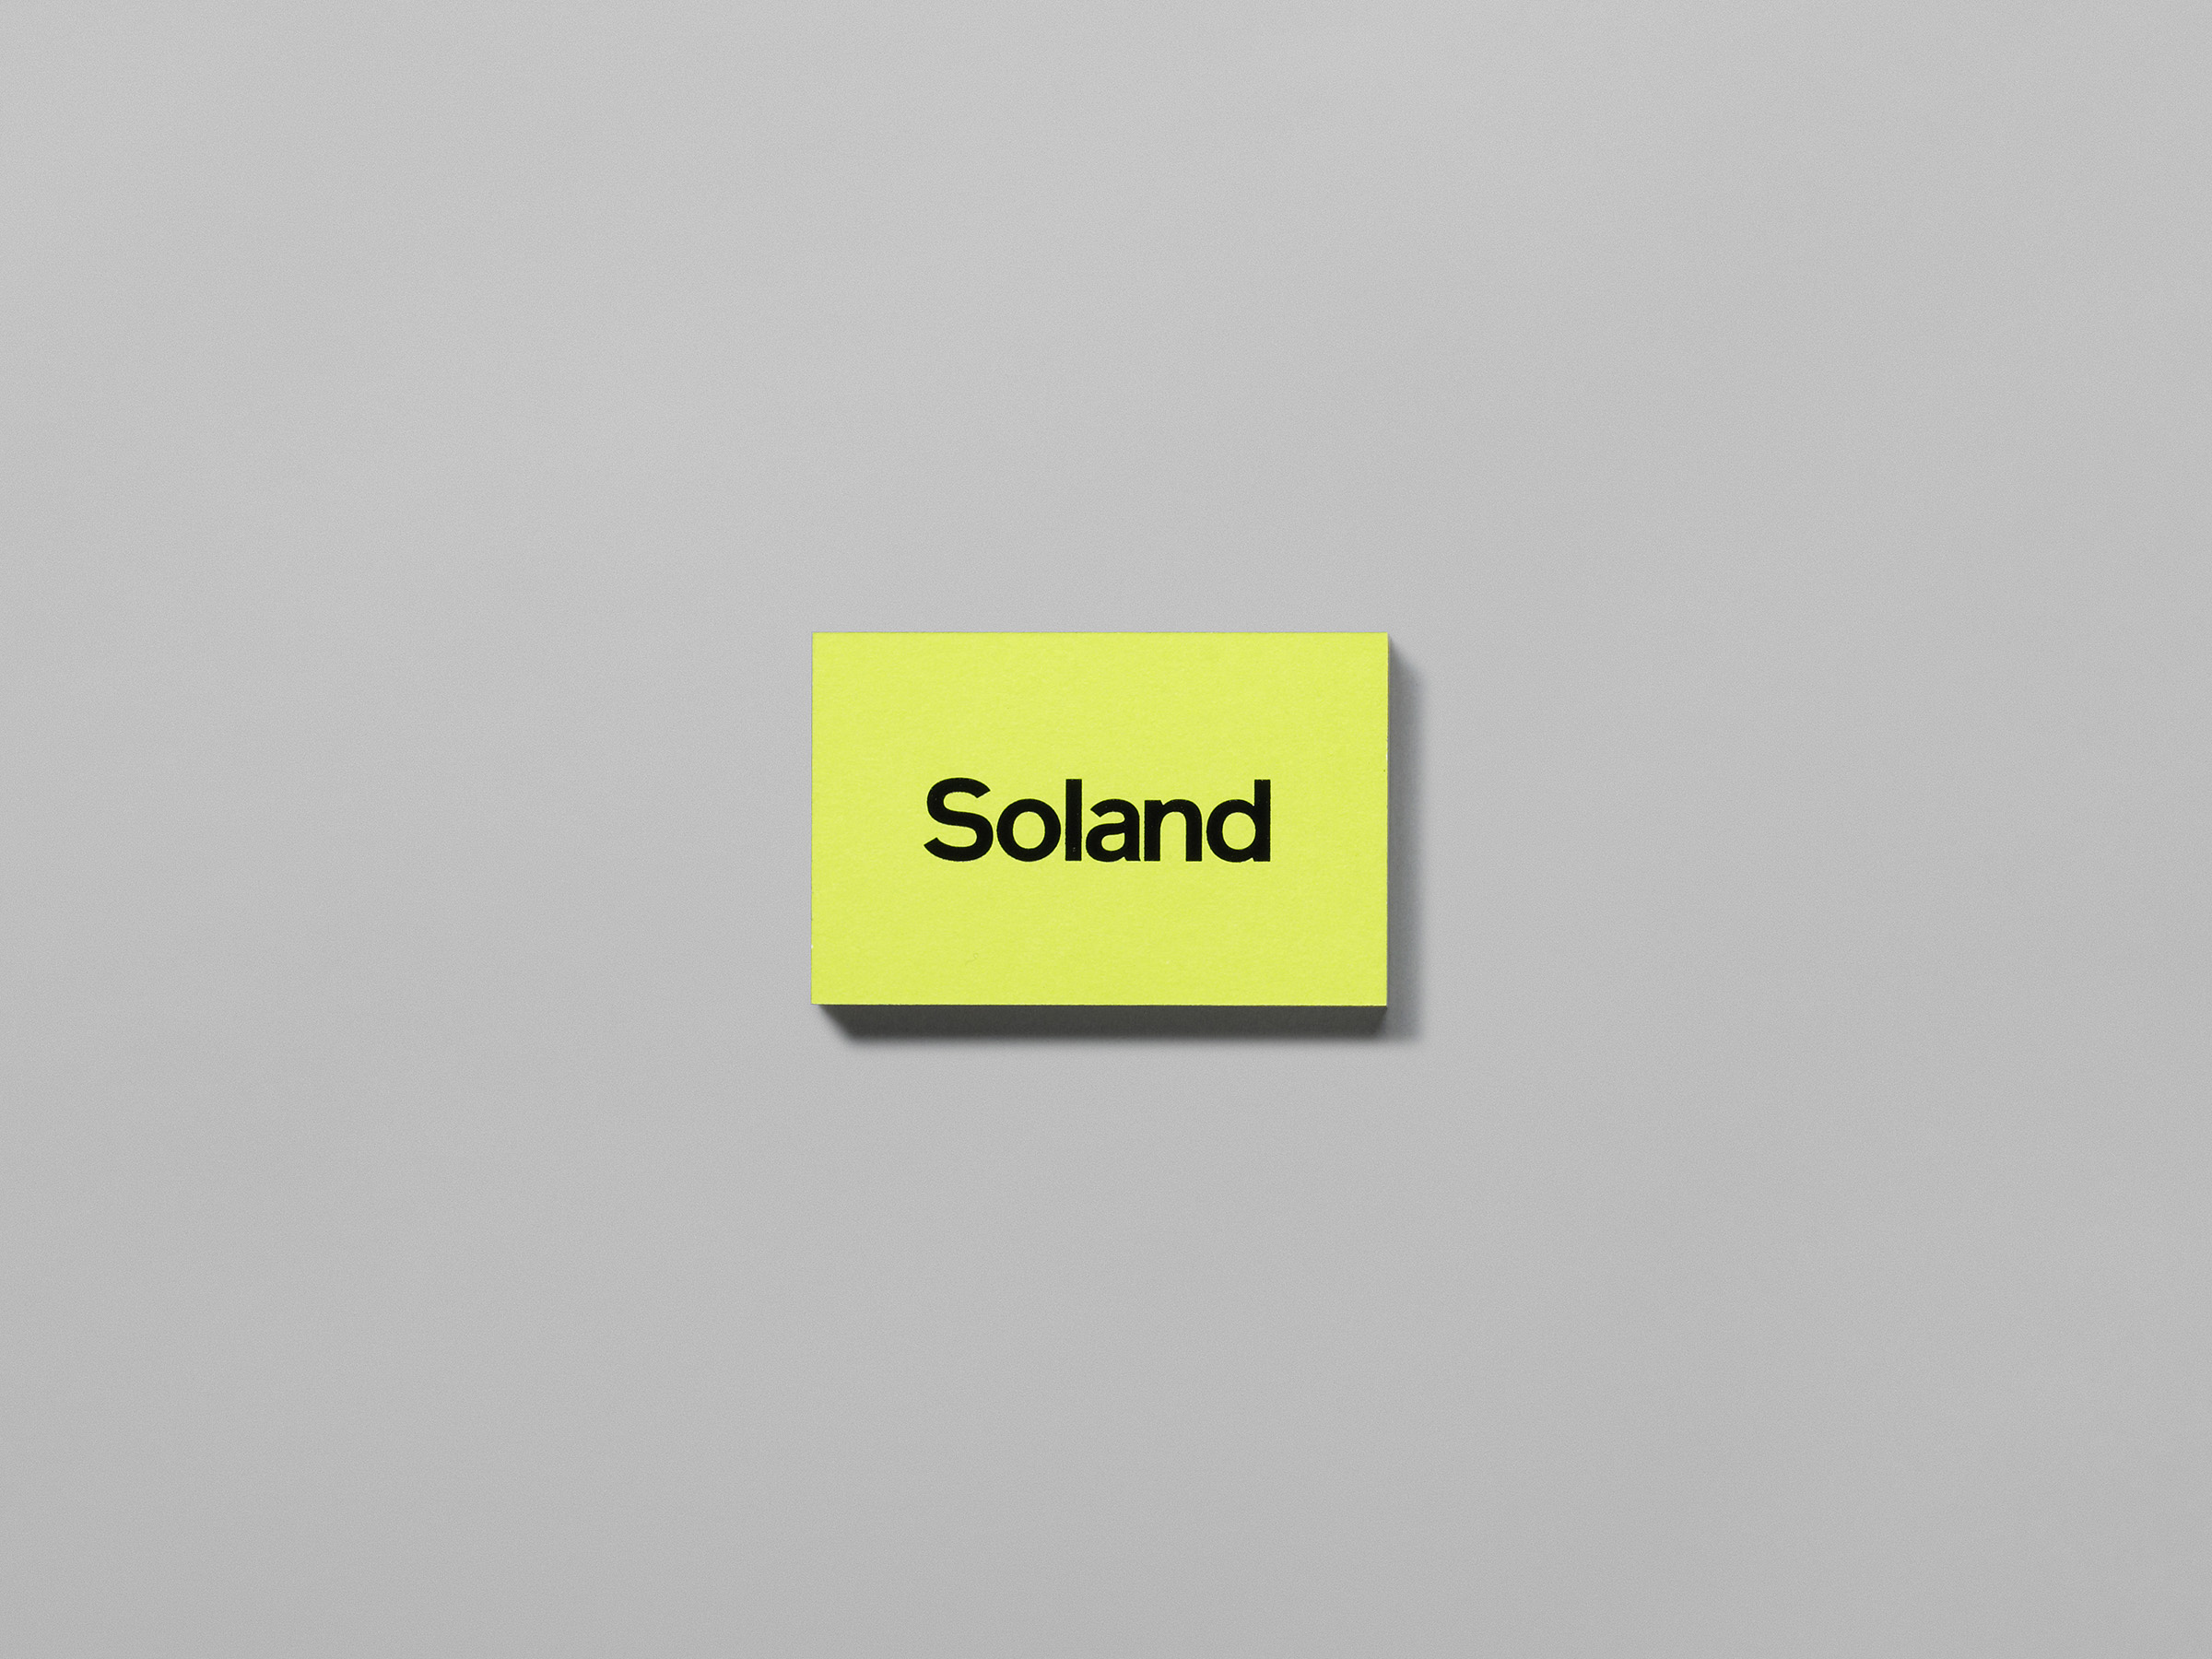 Soland